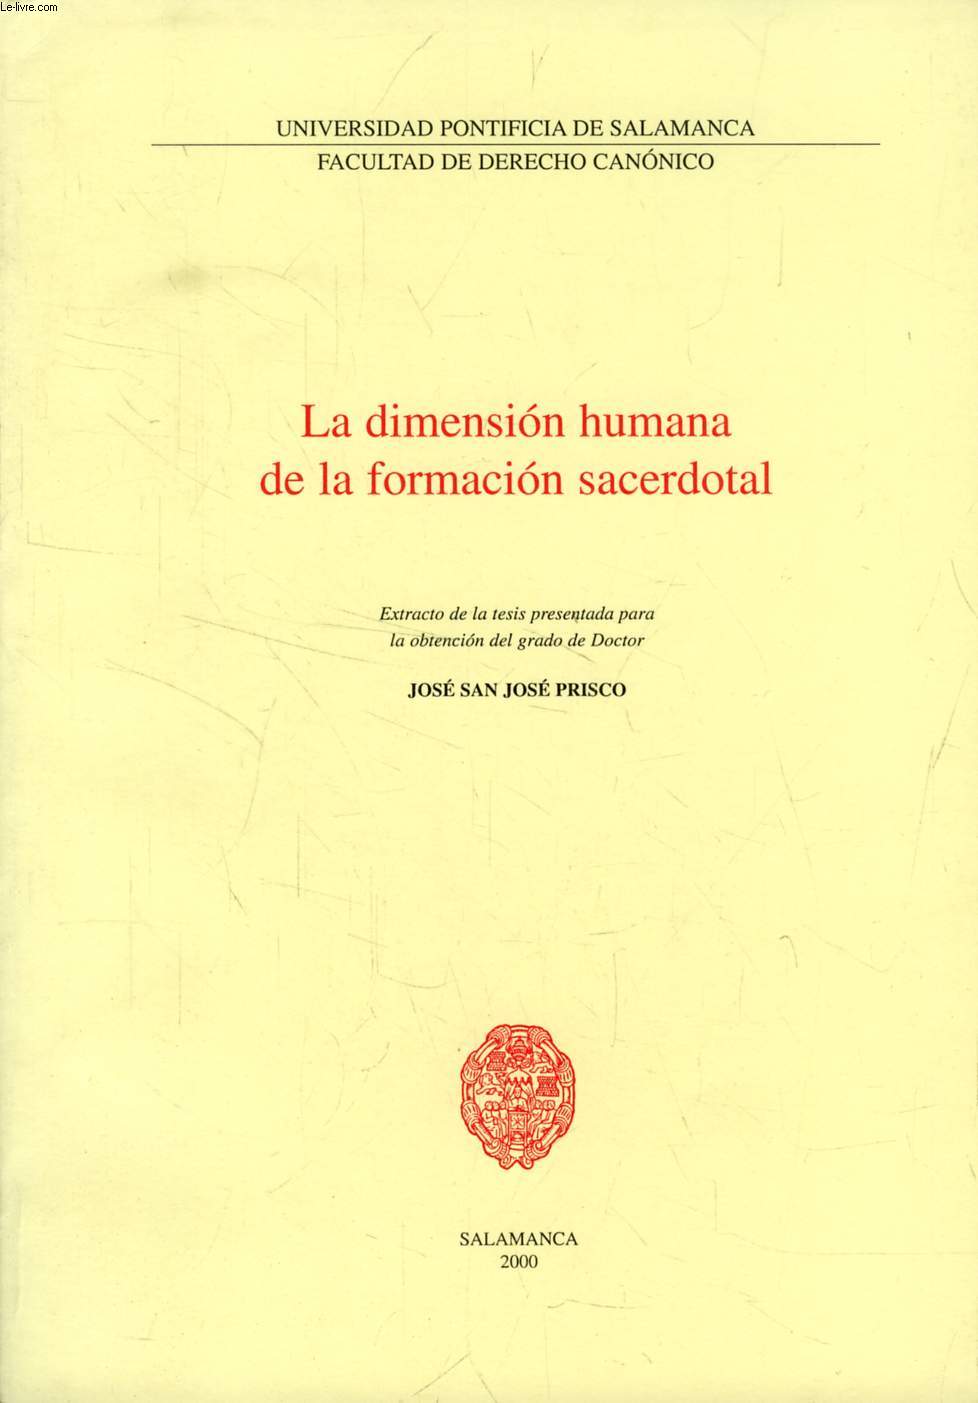 LA DIMENSION HUMANA DE LA FORMACION SACERDOTAL (EXTRACTO DE LA TESIS)